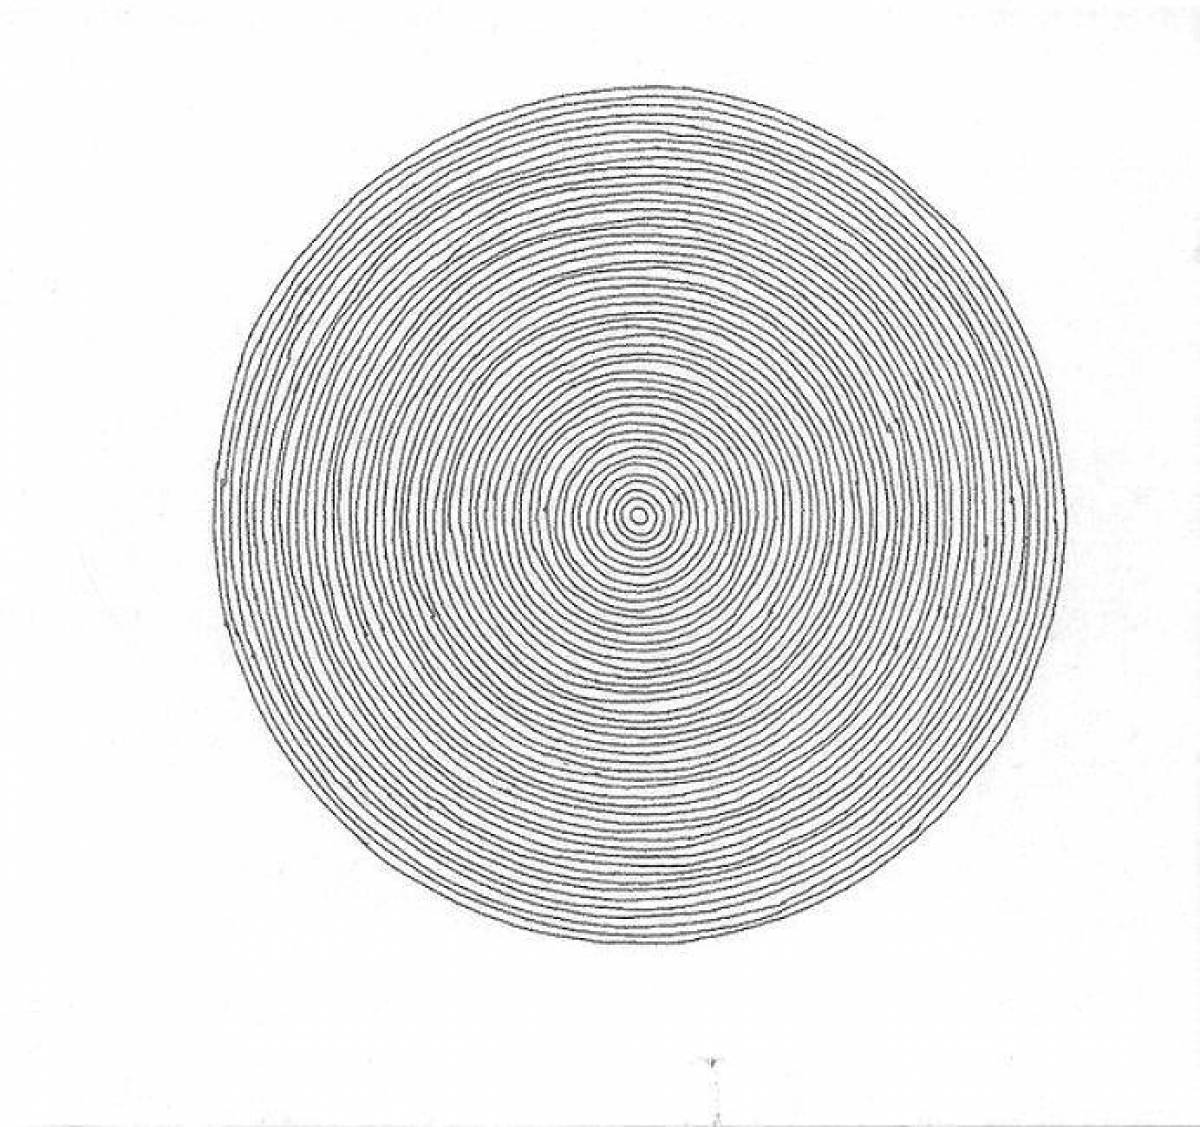 Coloring page dazzling circular pattern